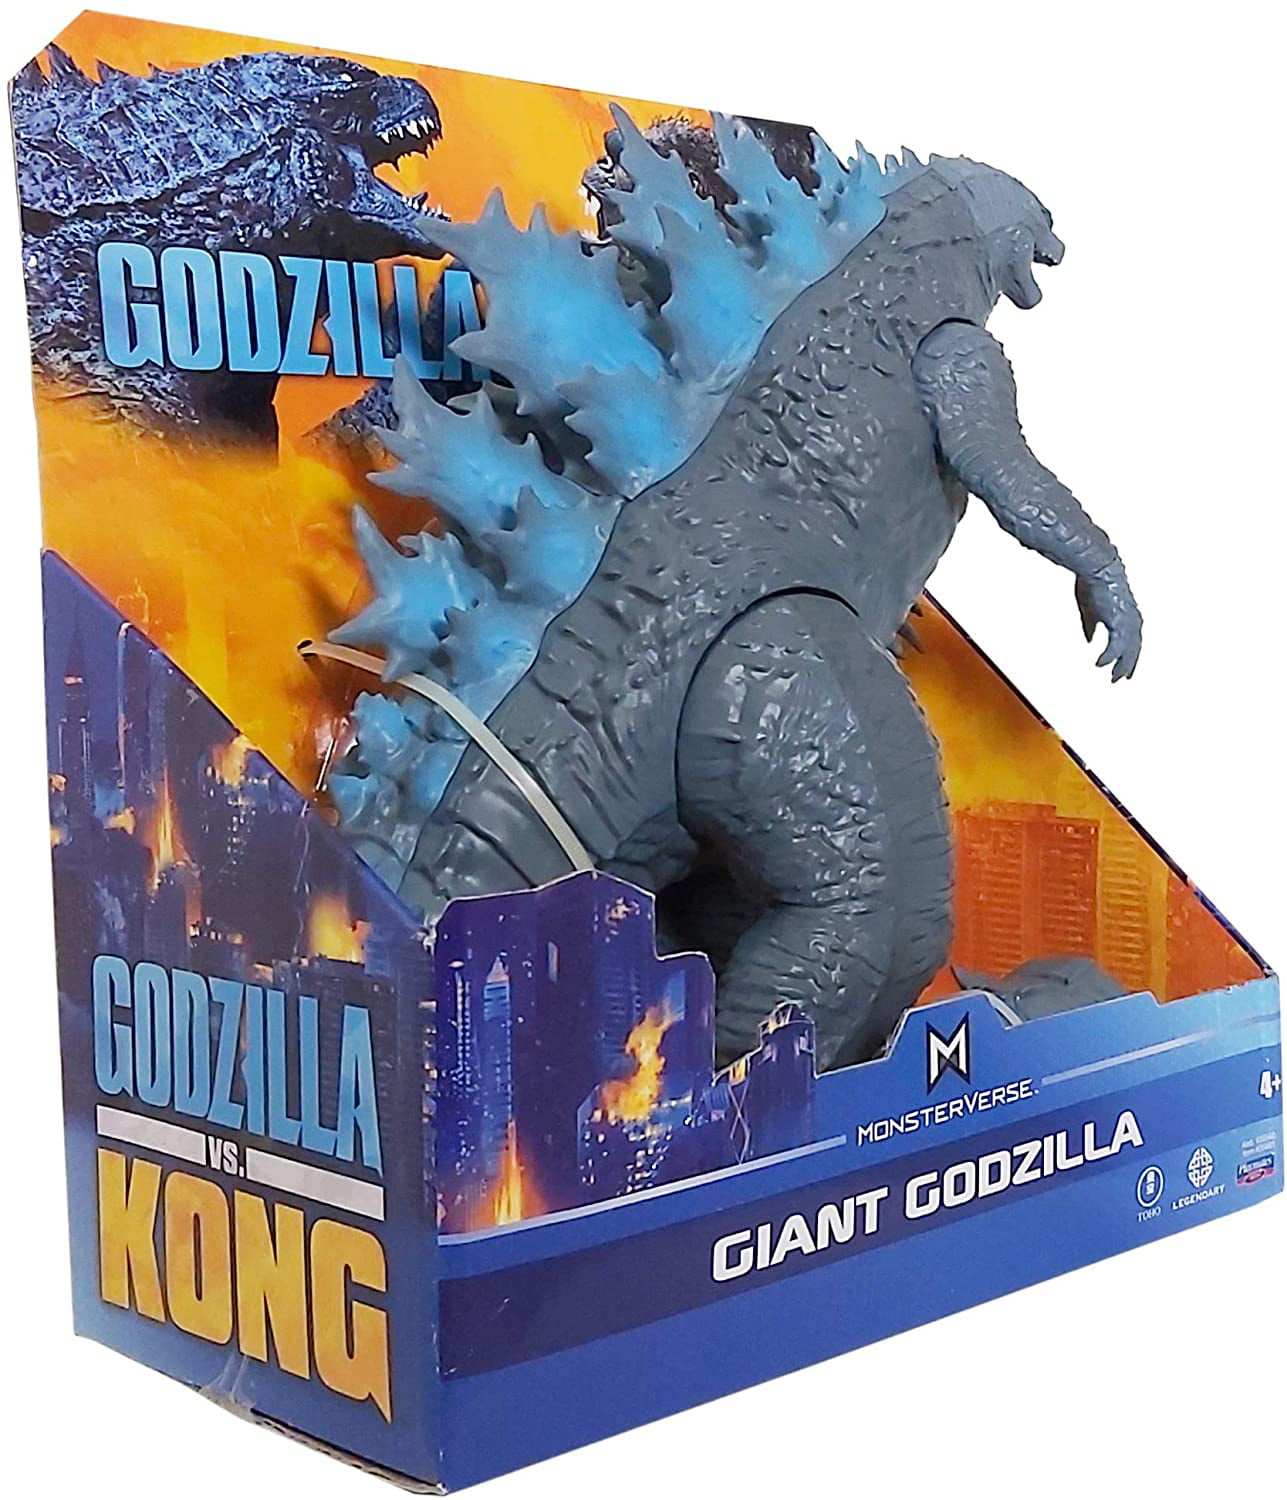 Godzilla Vs Kong Giant Mechagodzilla 11" Toy PLAYMATES IN HAND FREE SHIPPING 